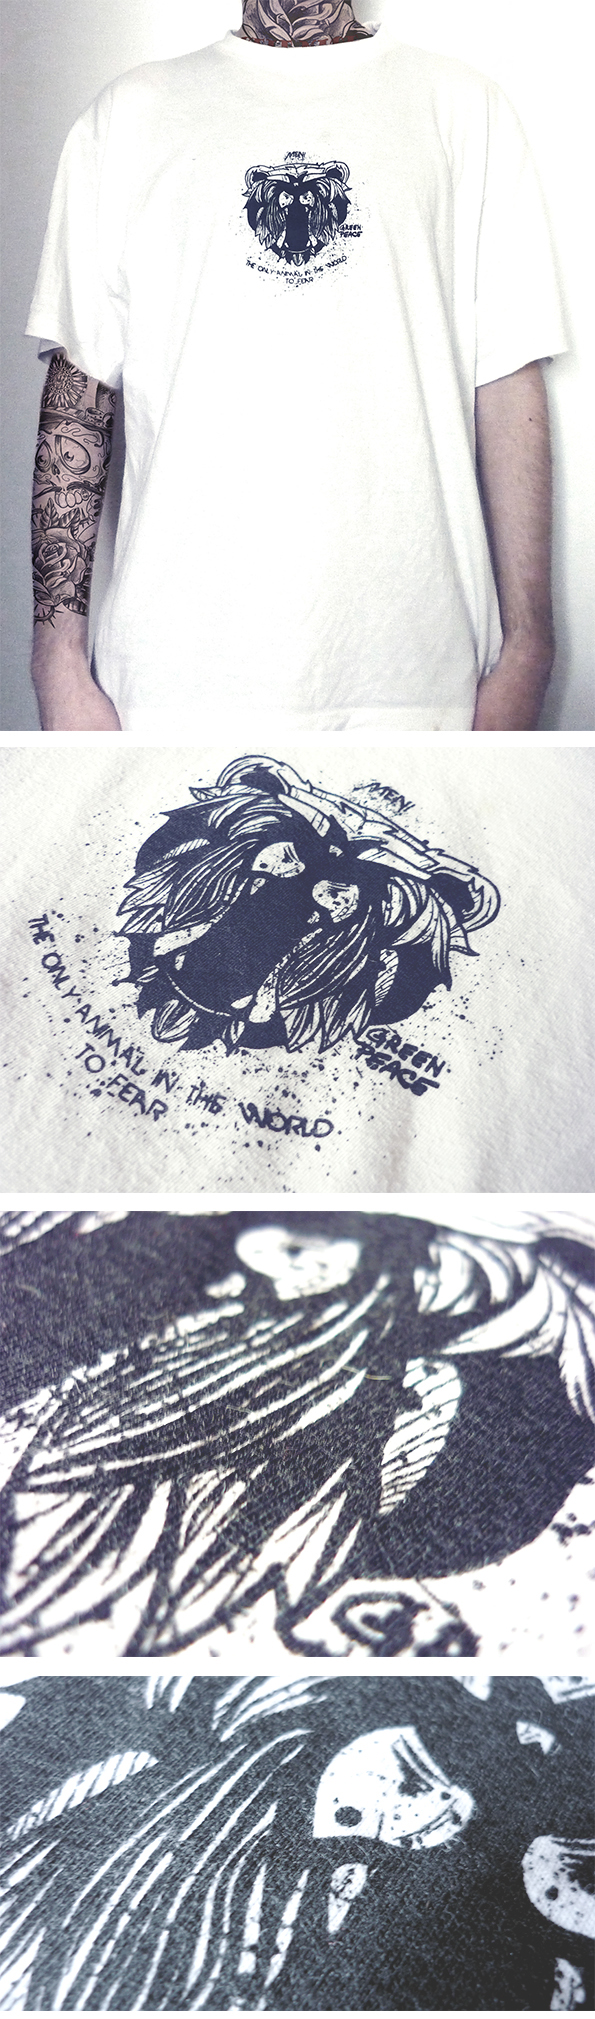 SILK print t-shirt textile bag black ink olehula animal tiger men Greenpeace Portugal photo hand